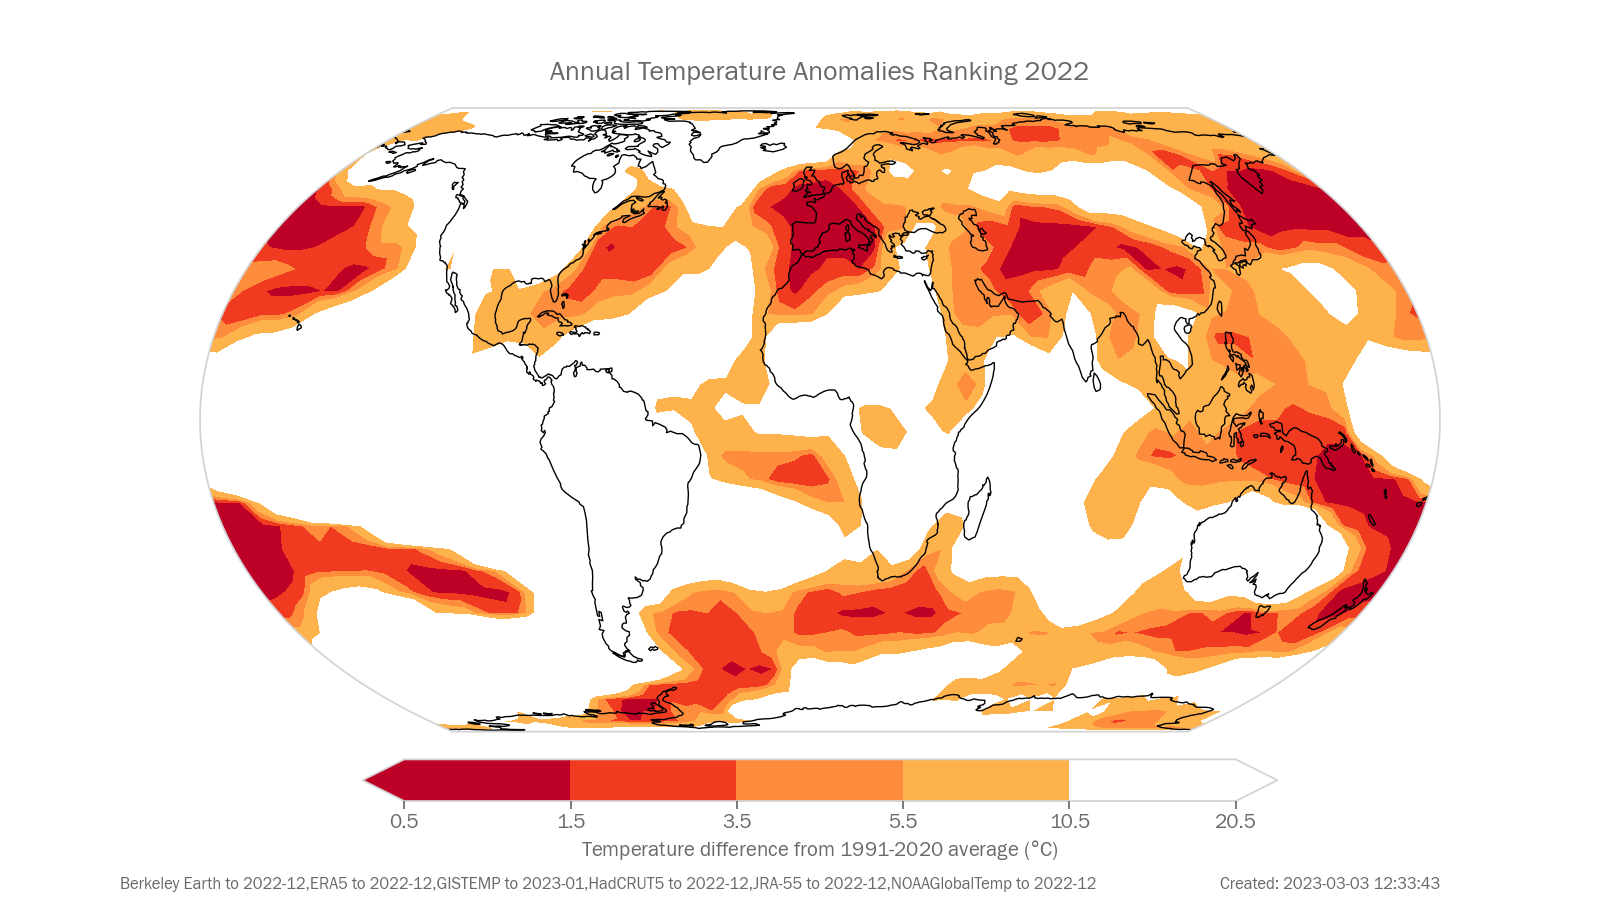 Annual Near surface temperature rank (°C)  for 2022. Data shown are the median rank of the following six data sets: Berkeley Earth, ERA5, GISTEMP, HadCRUT5, JRA-55, NOAAGlobalTemp.